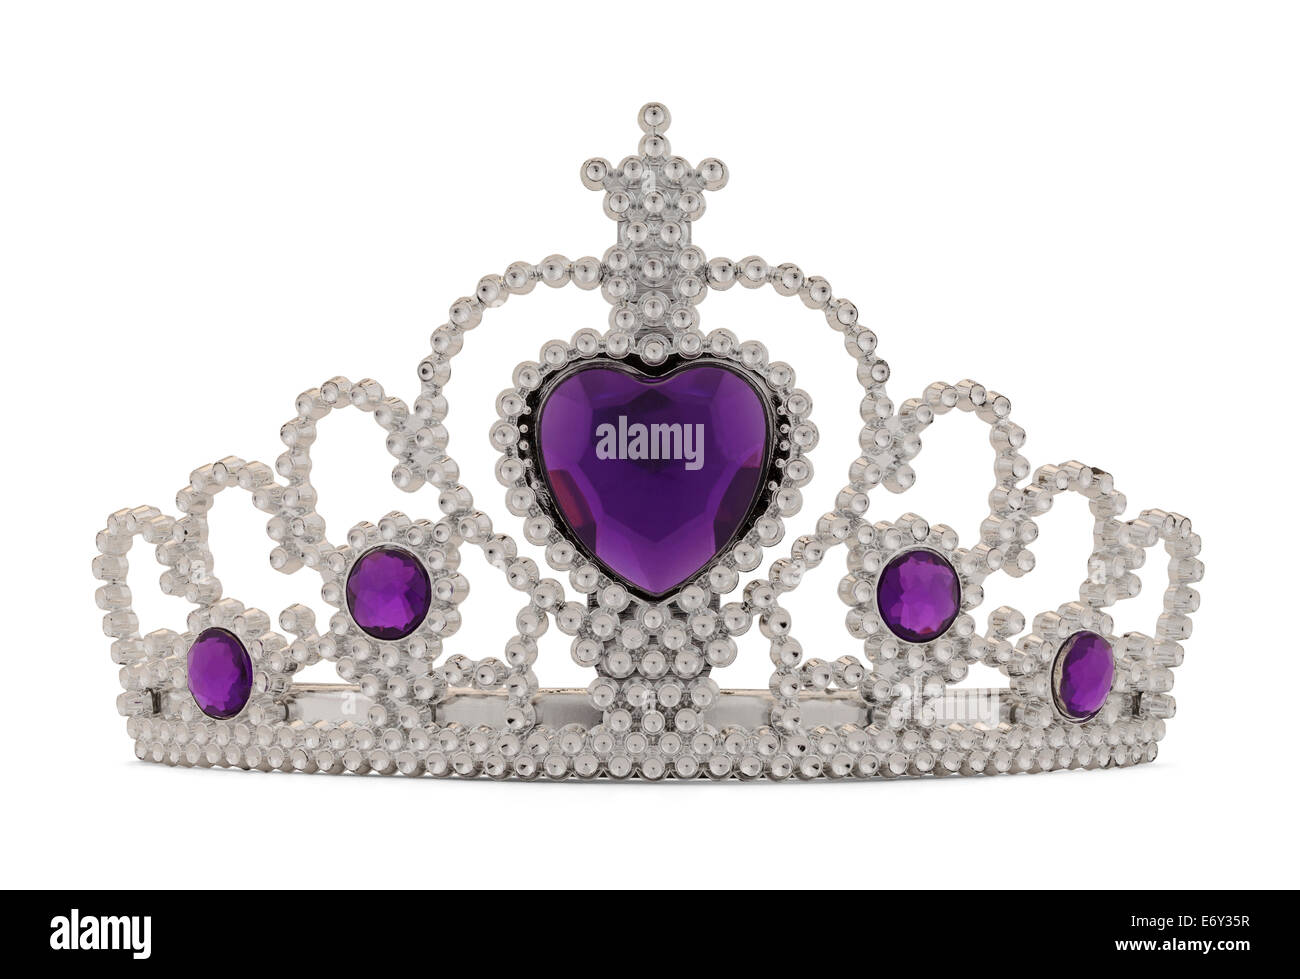 Empress eugenie tiara hi-res stock photography and images - Alamy